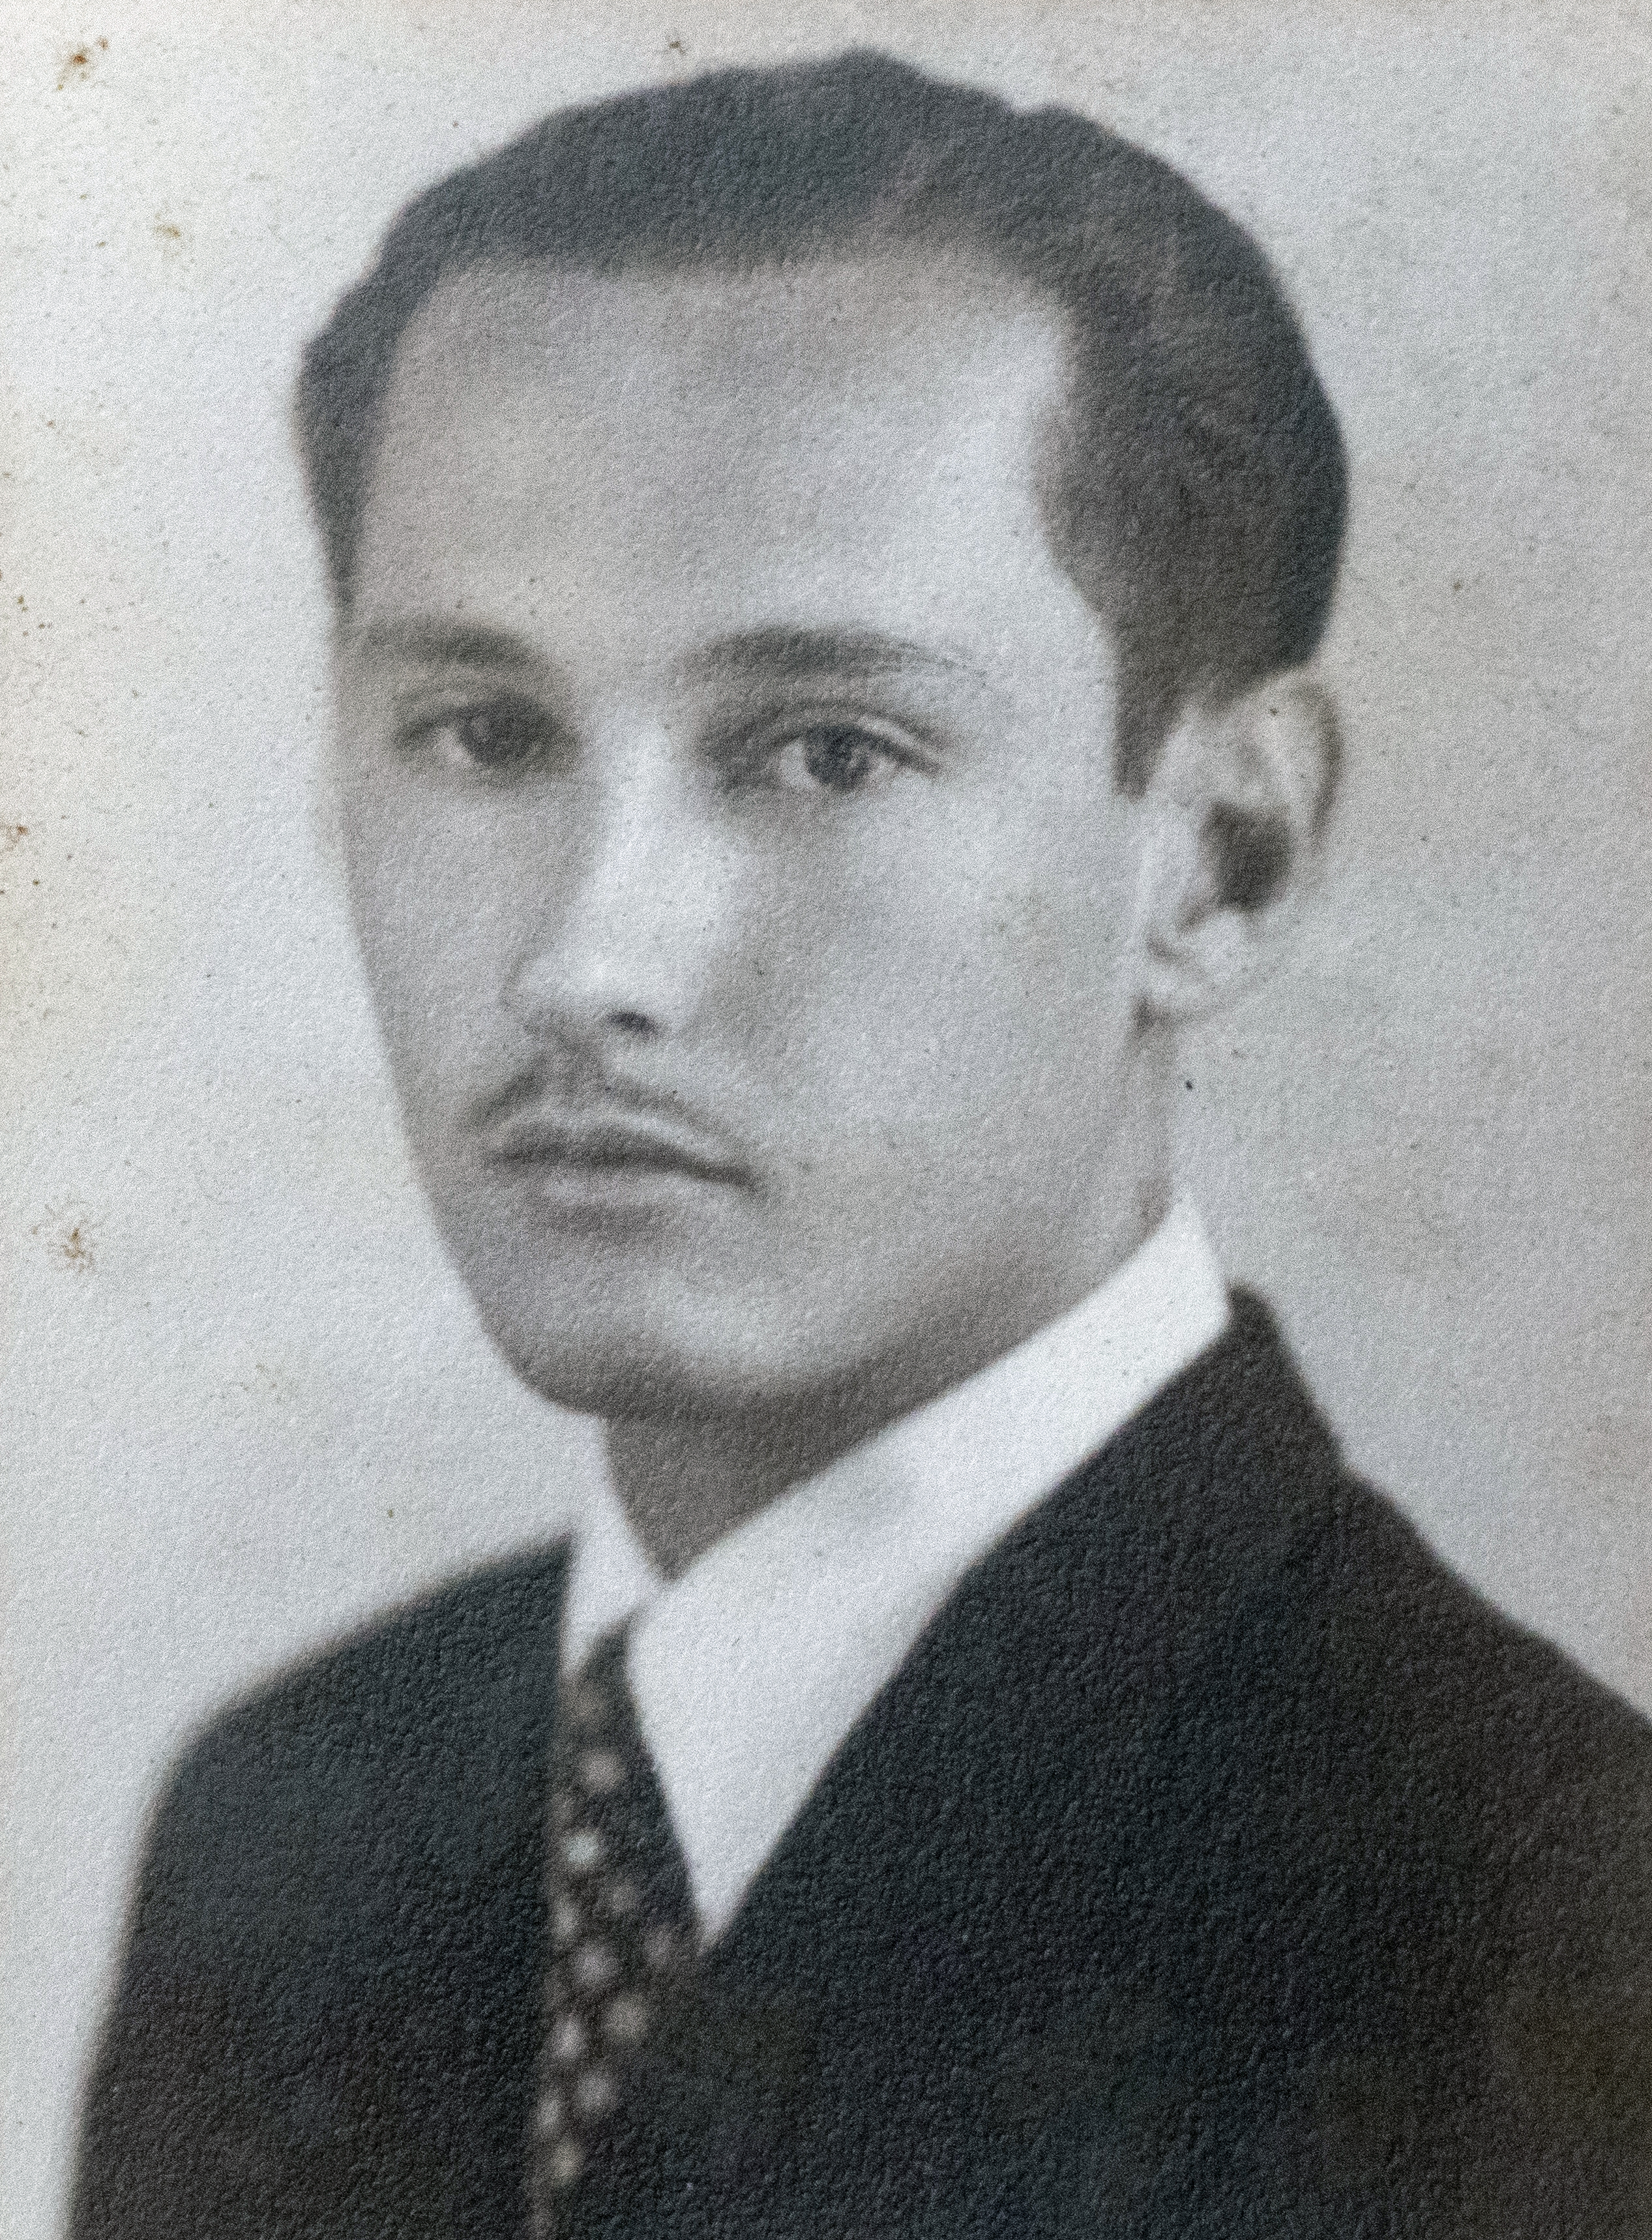 Juan Darío Uribe Gaviria